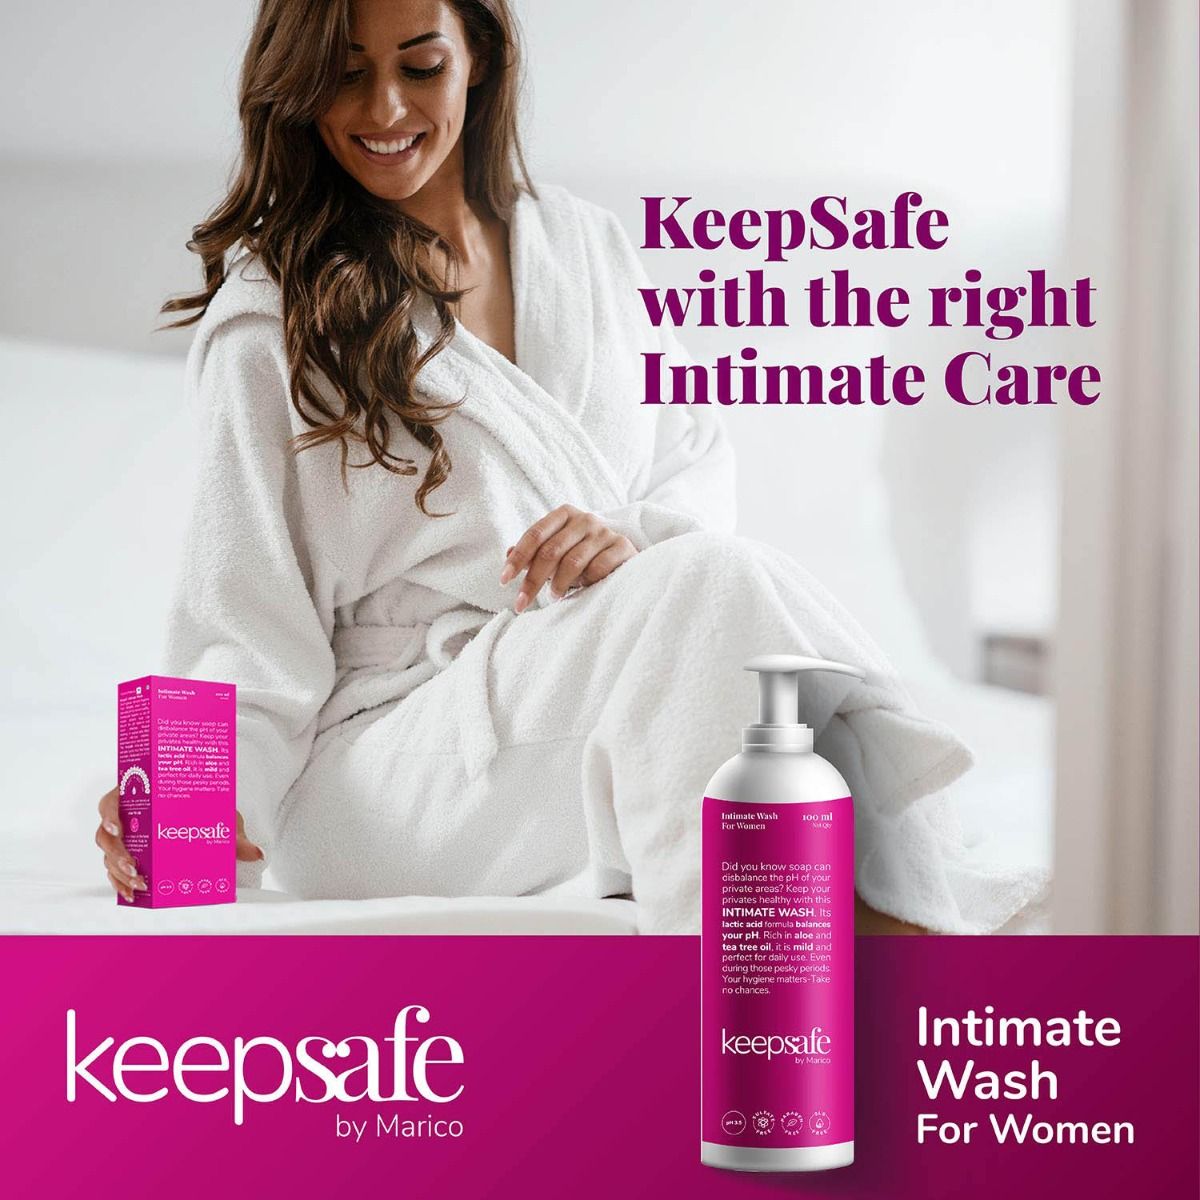 KeepSafe Intimate Wash, 100 ml, Pack of 1 